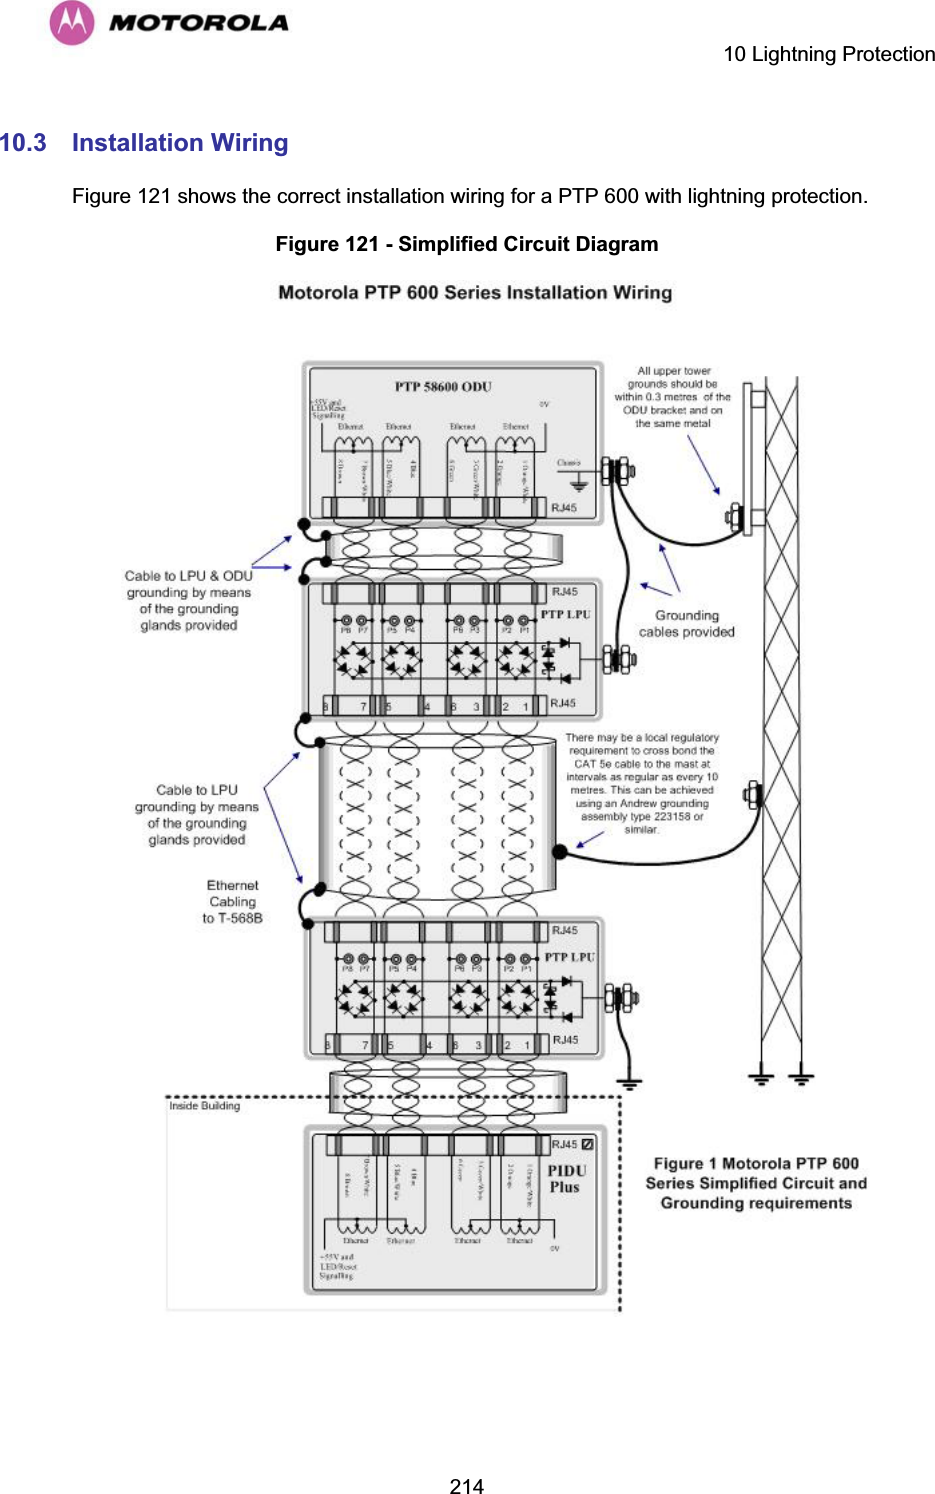    10 Lightning Protection  21410.3 Installation Wiring Figure 121 shows the correct installation wiring for a PTP 600 with lightning protection. Figure 121 - Simplified Circuit Diagram    